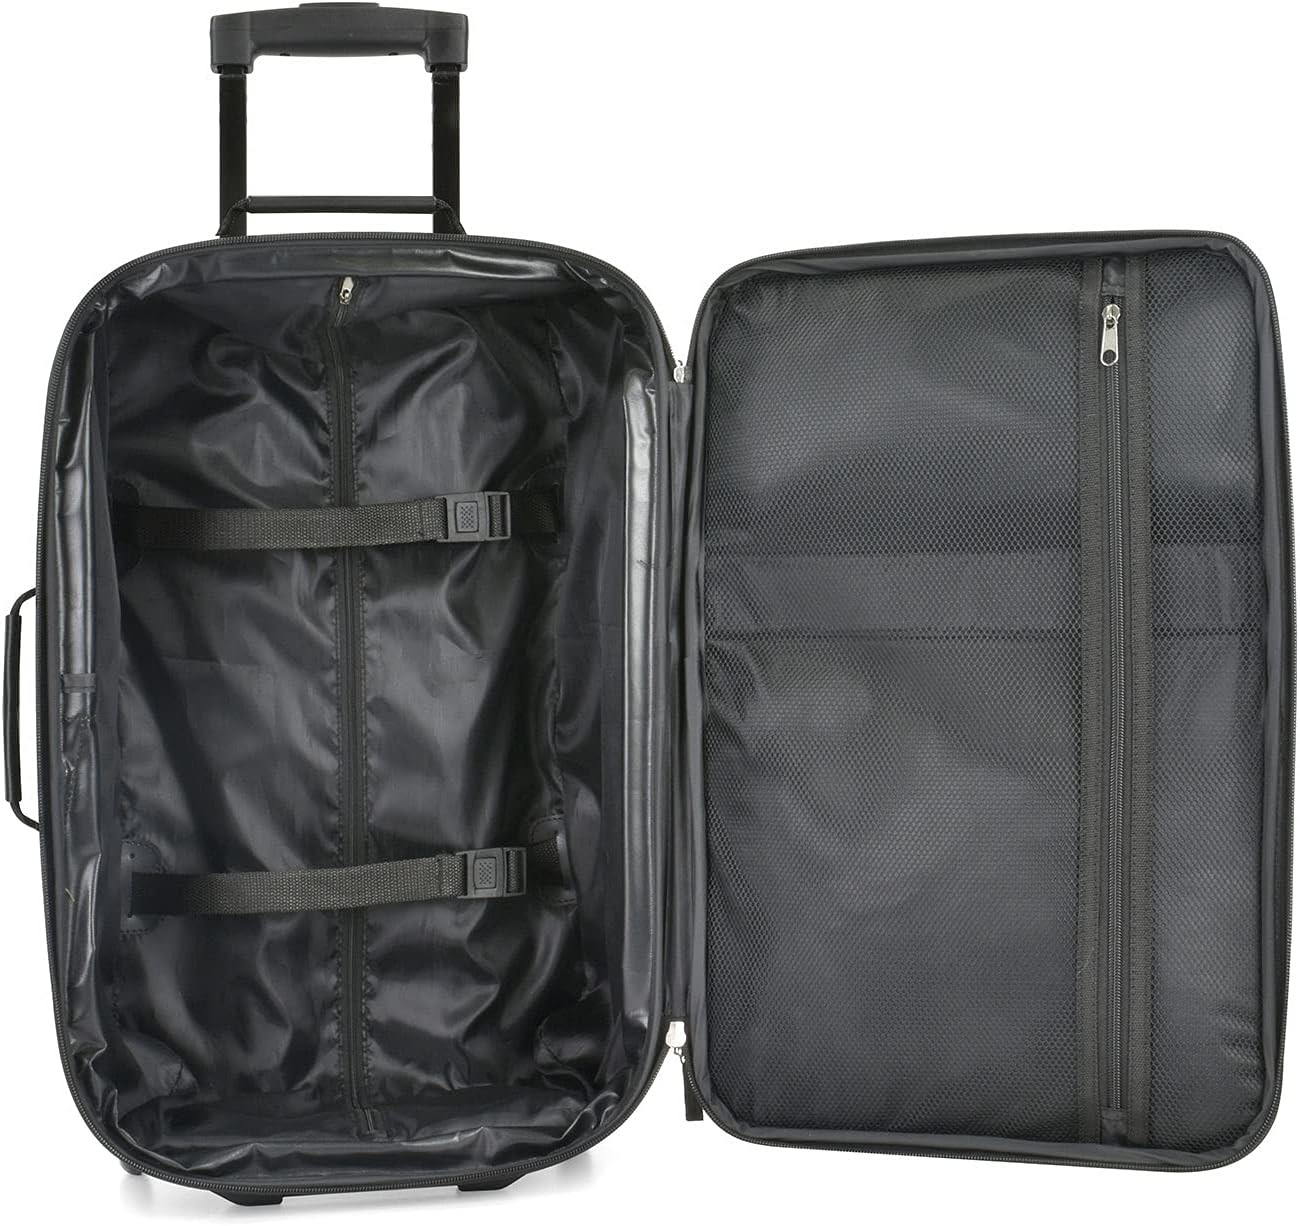 U.S. Traveler Rio Rugged Fabric Luggage, Royal Blue, 2 Wheel           